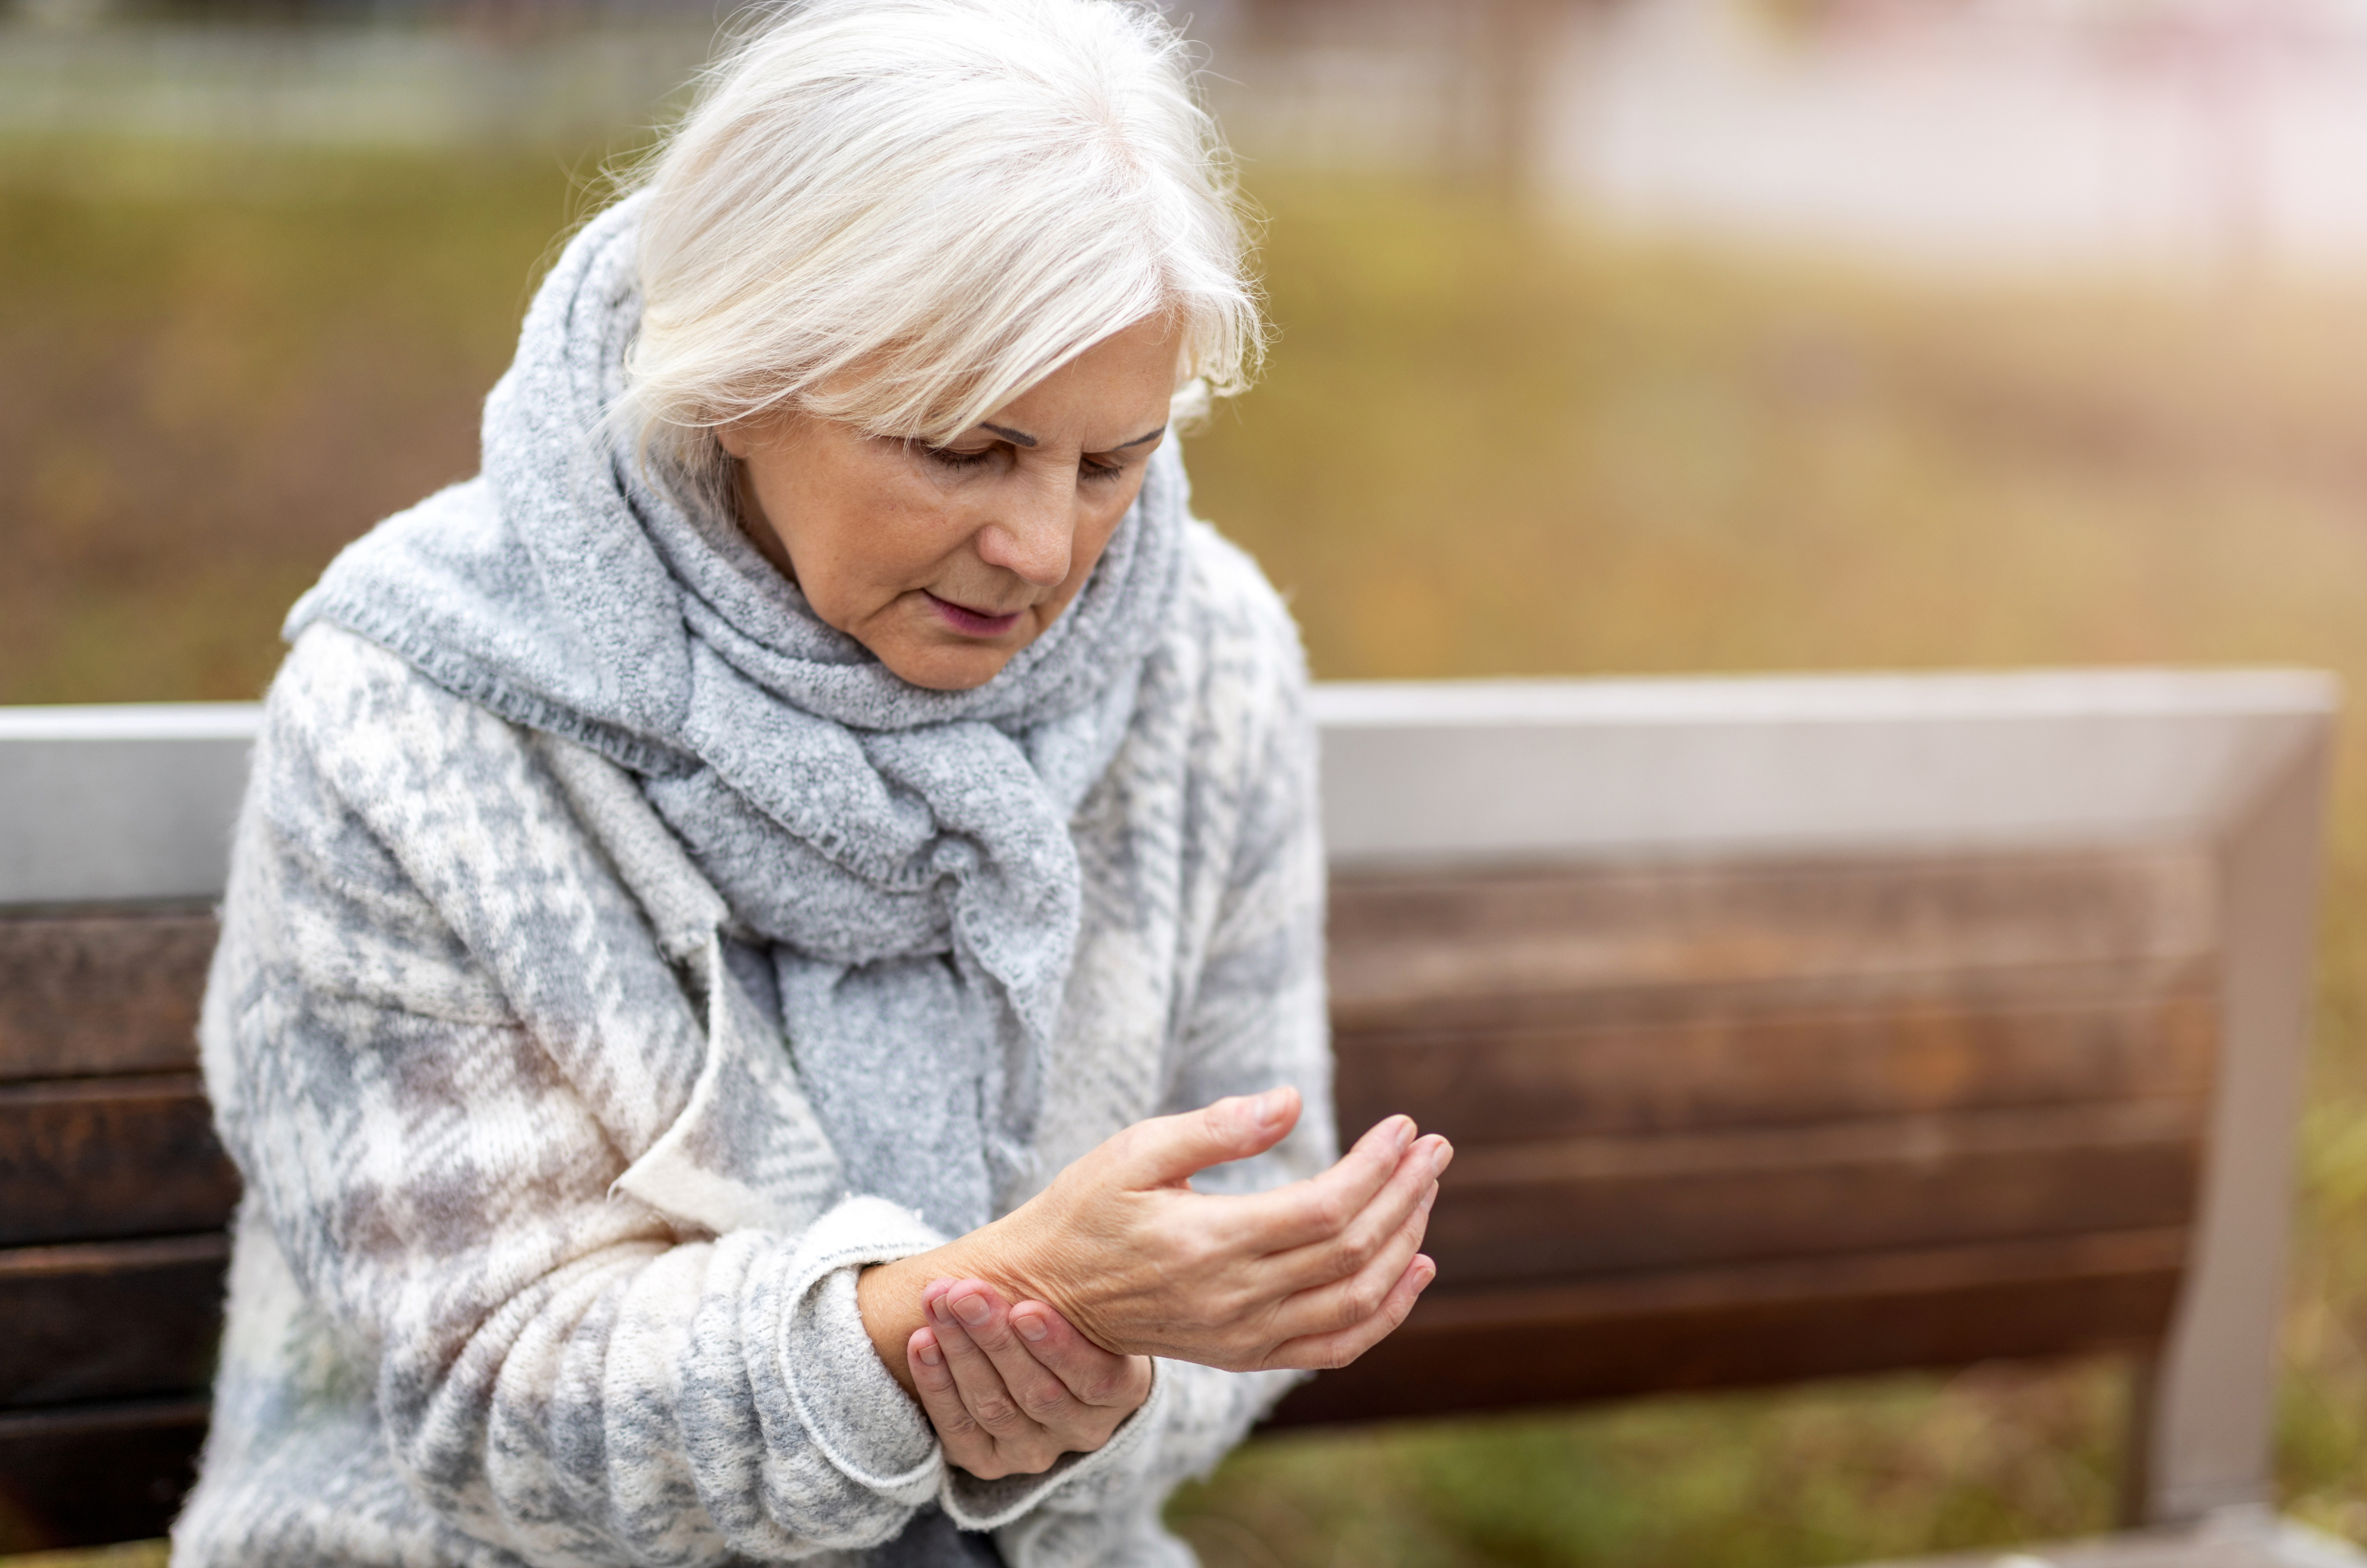 Elderly Woman Suffering With Arthritis Pain In Wrist